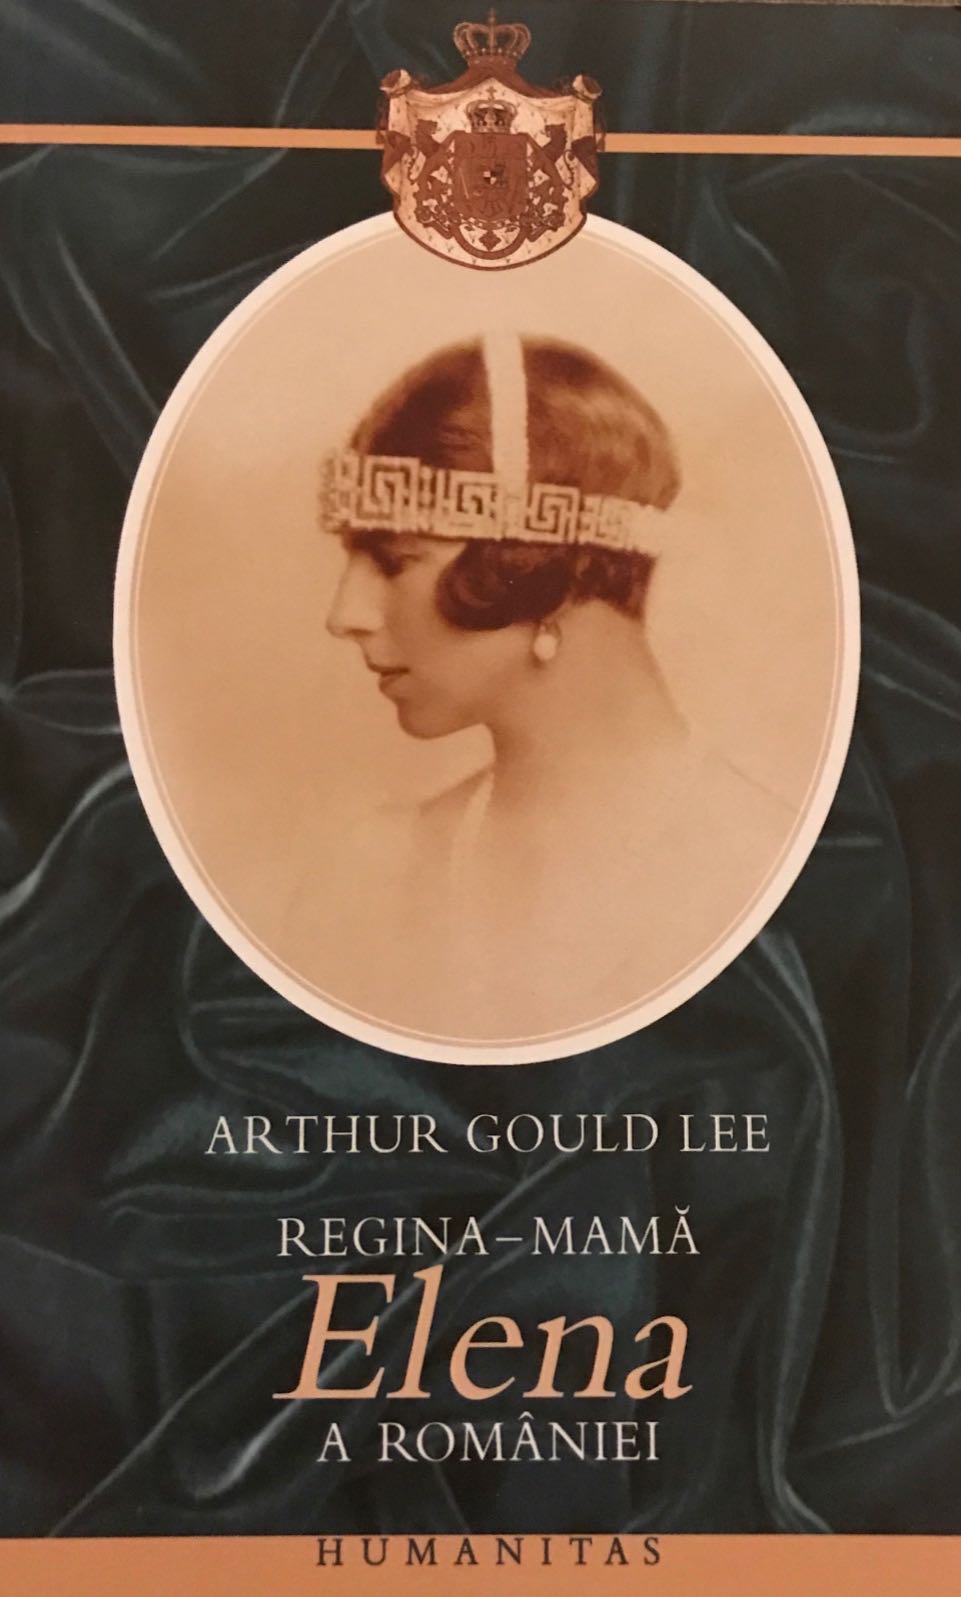 Regina-mama Elena a Romaniei, Arthur Gould Lee, Editura Humanitas, 2005